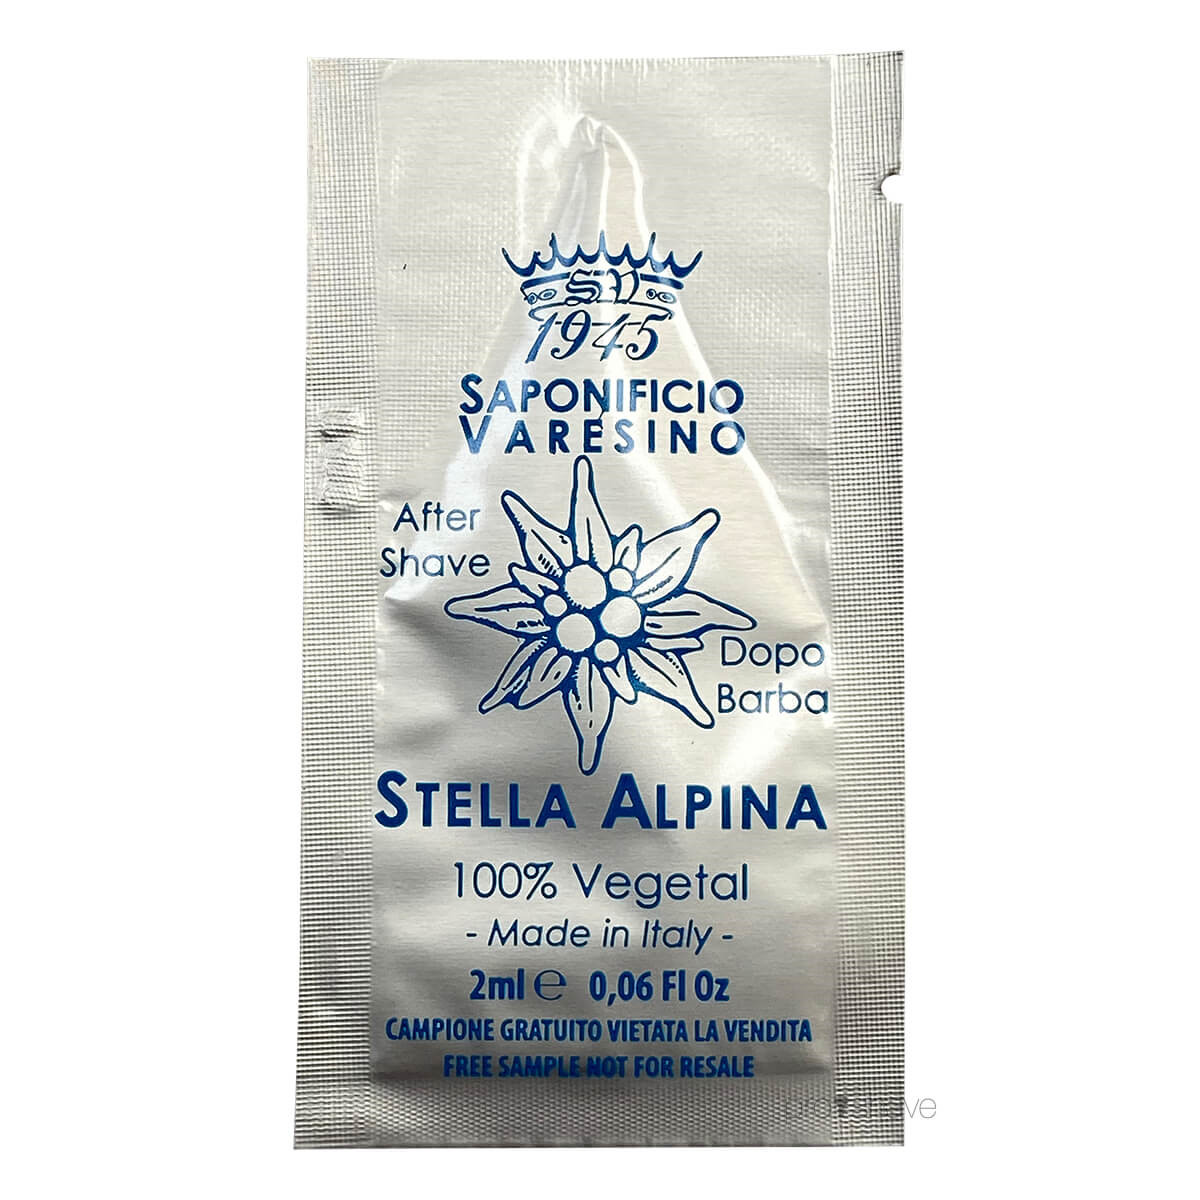 Saponificio Varesino Aftershave, Stella Alpina, SAMPLE, 2 ml.